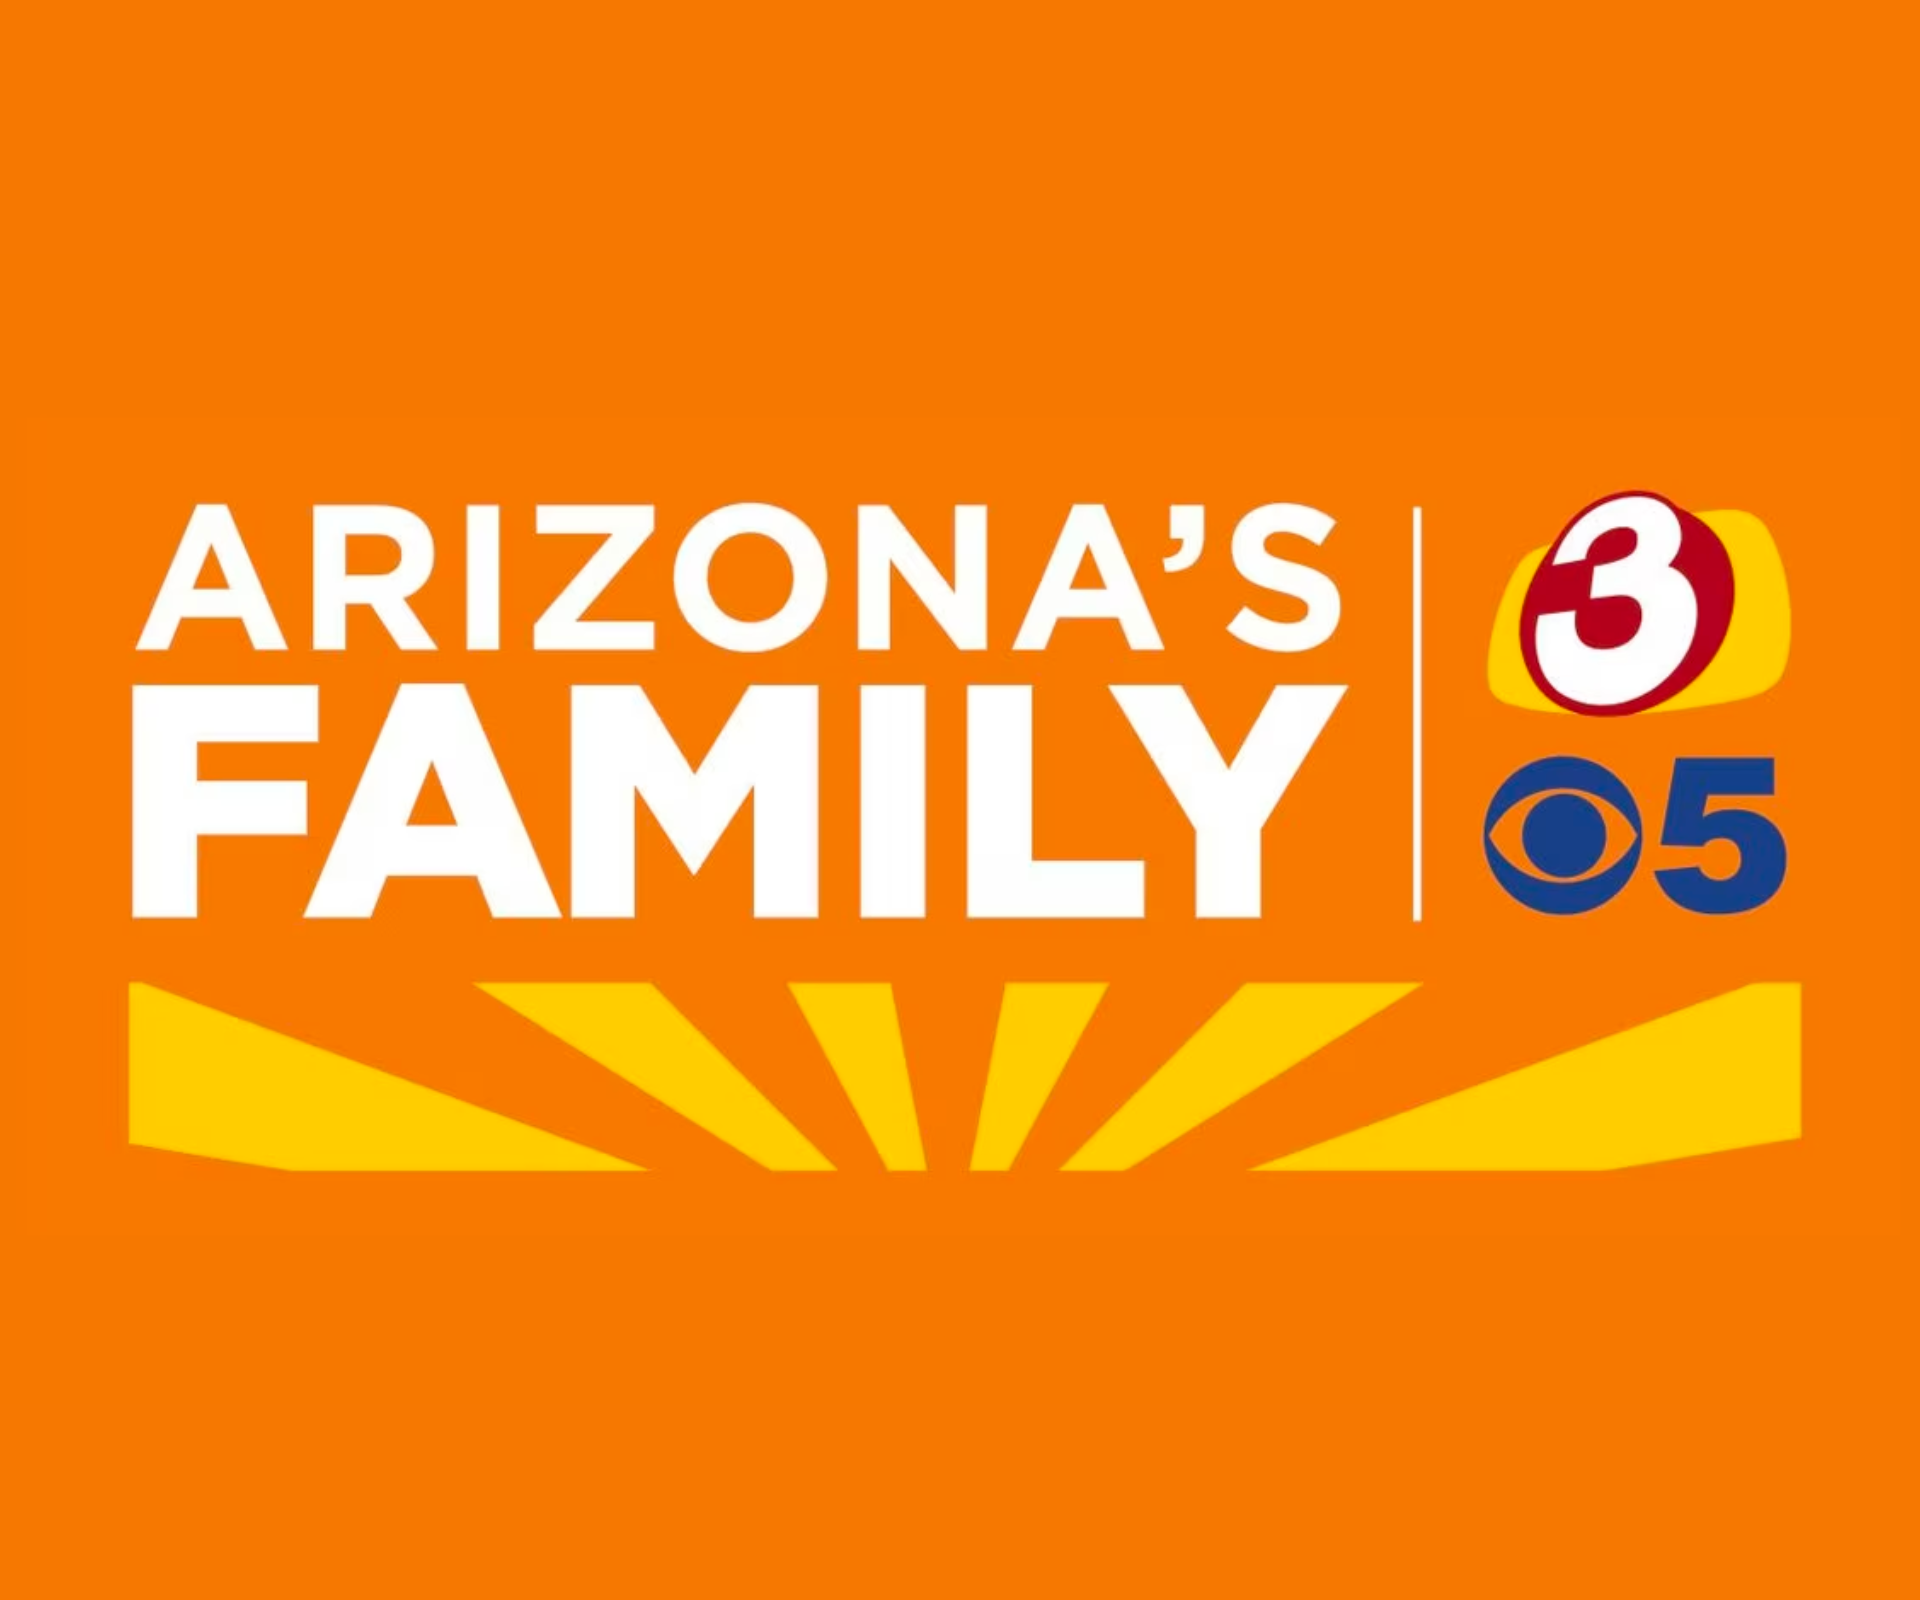 Child welfare advocates tell Arizona’s Family that DCS needs to do more to keep kids safe